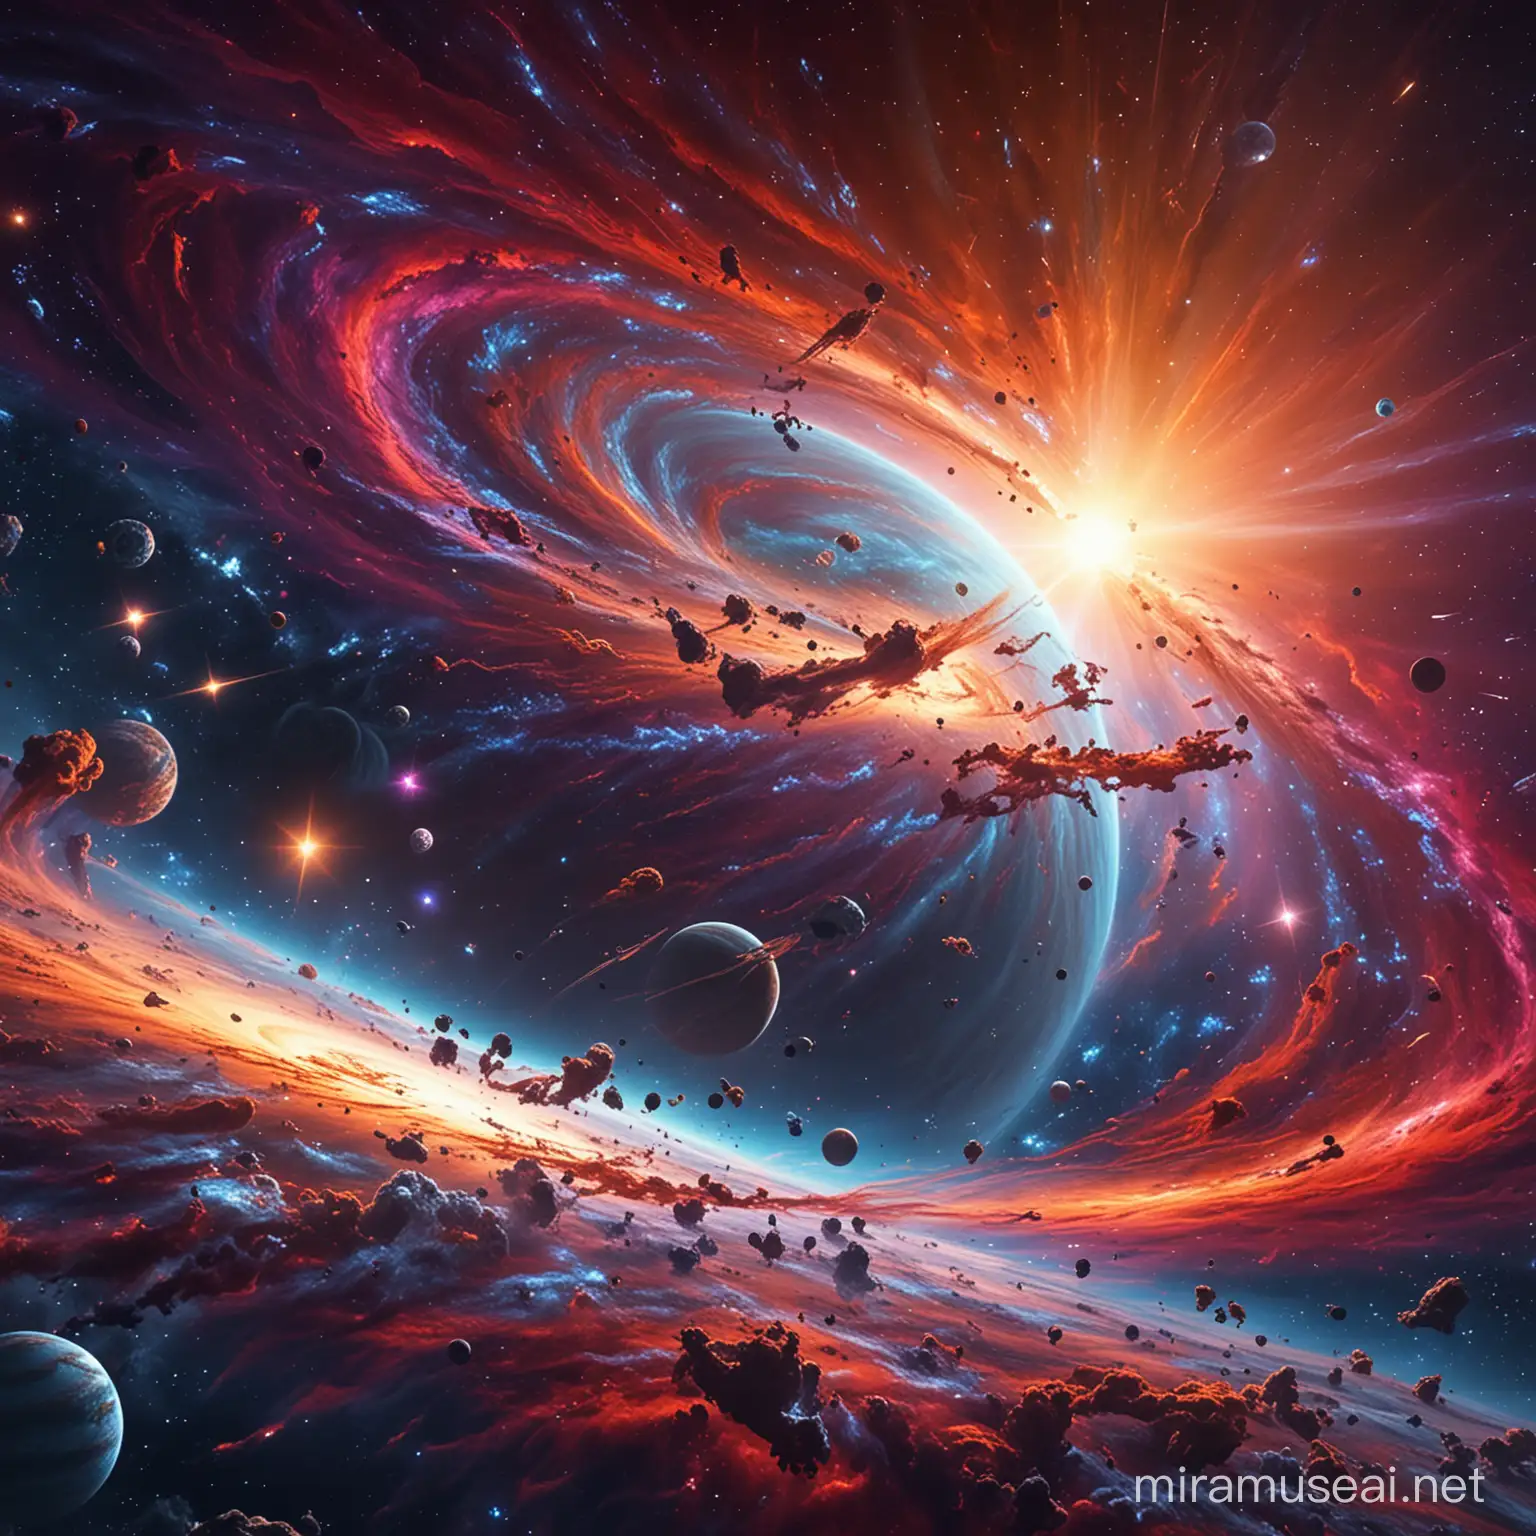 Starry Night Sky in a Vibrant 4K Universe